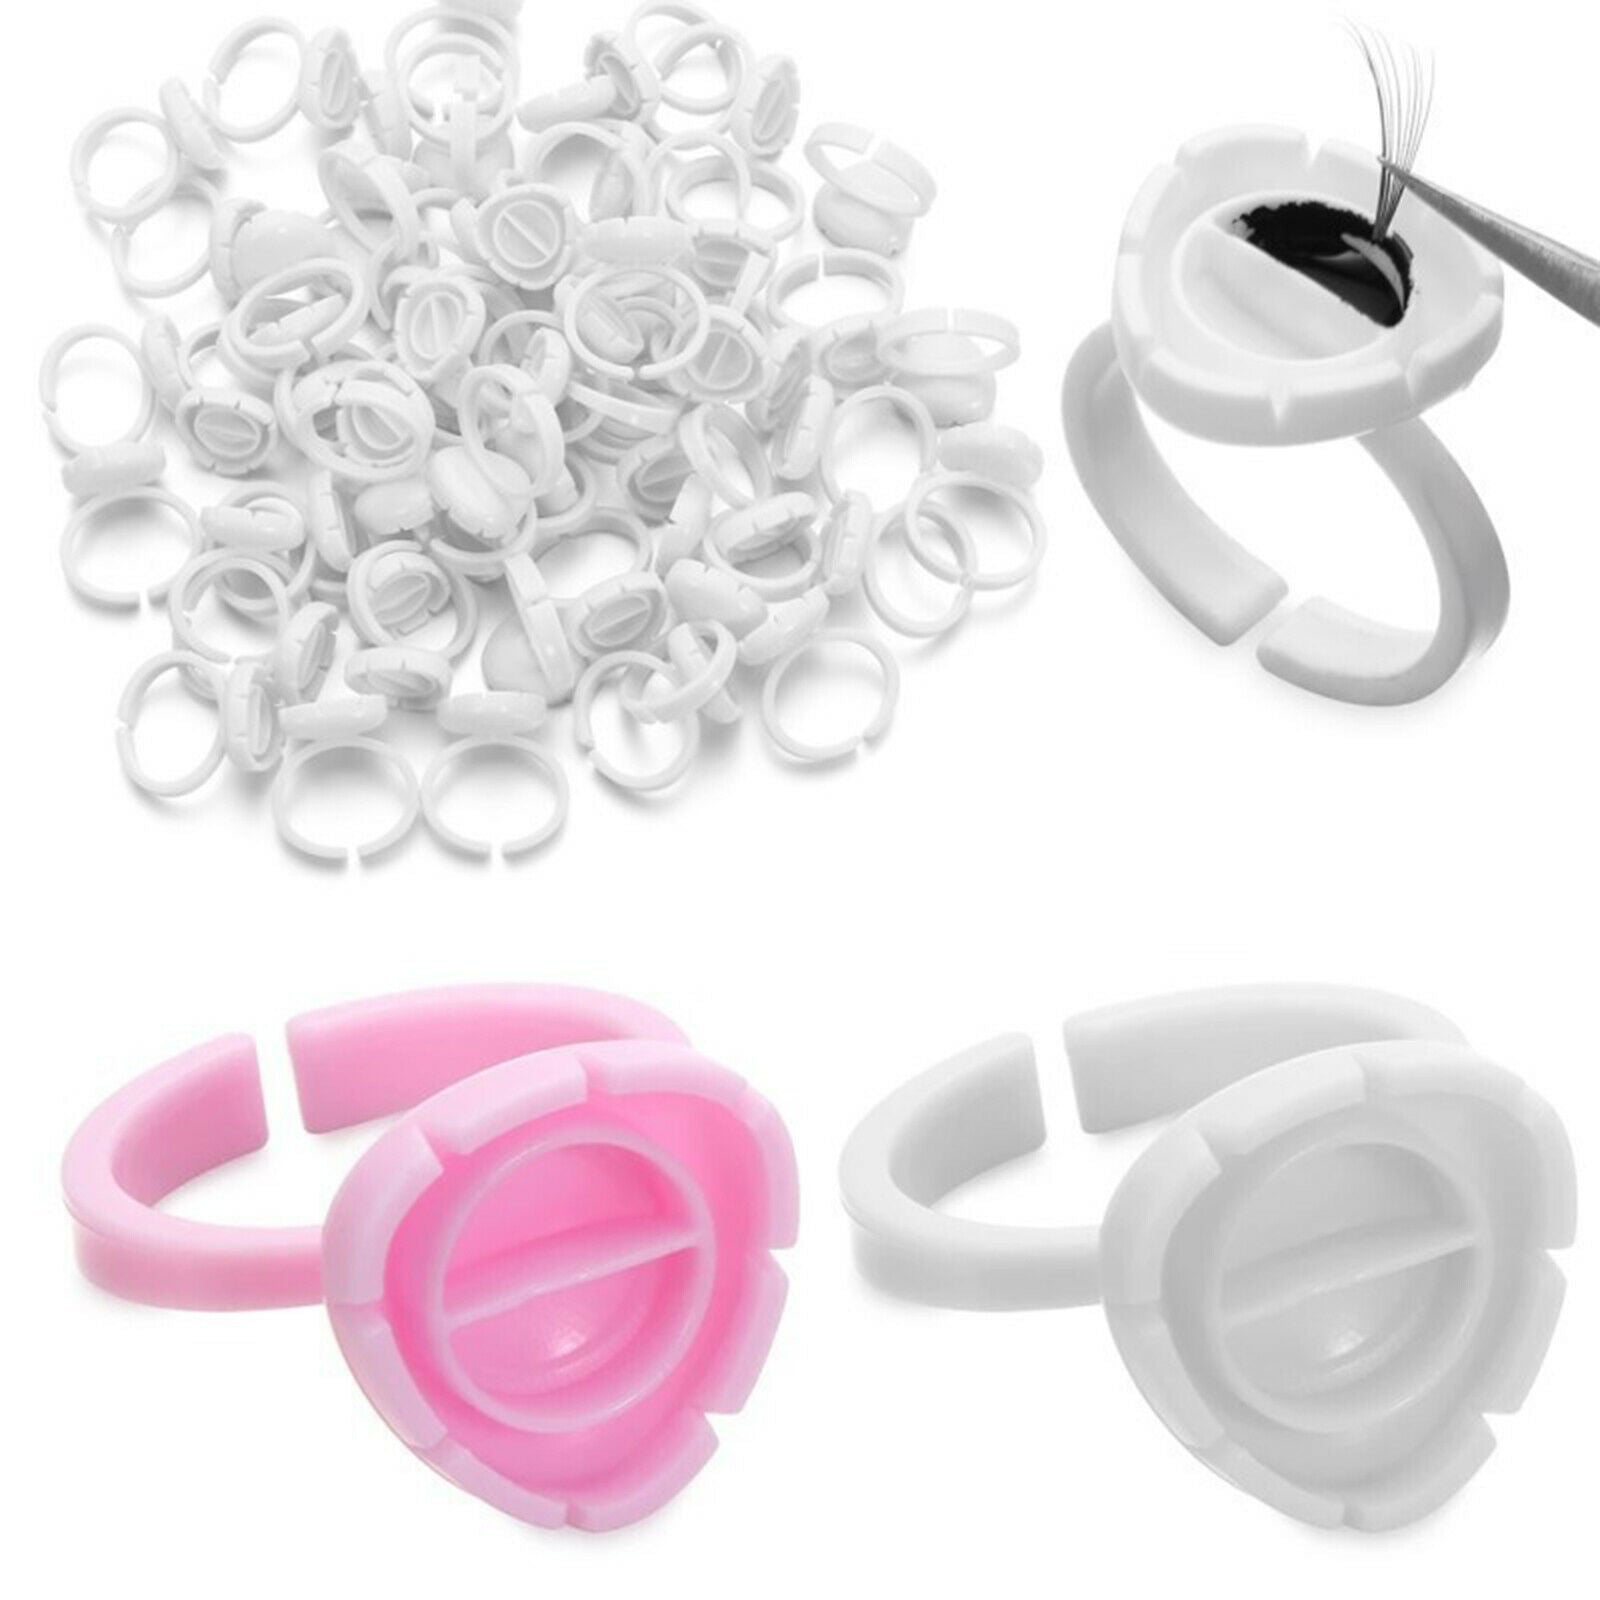 Eyelash Extension Rings Lash Glue Cup Glue Rings Makeup Supplies Tools White